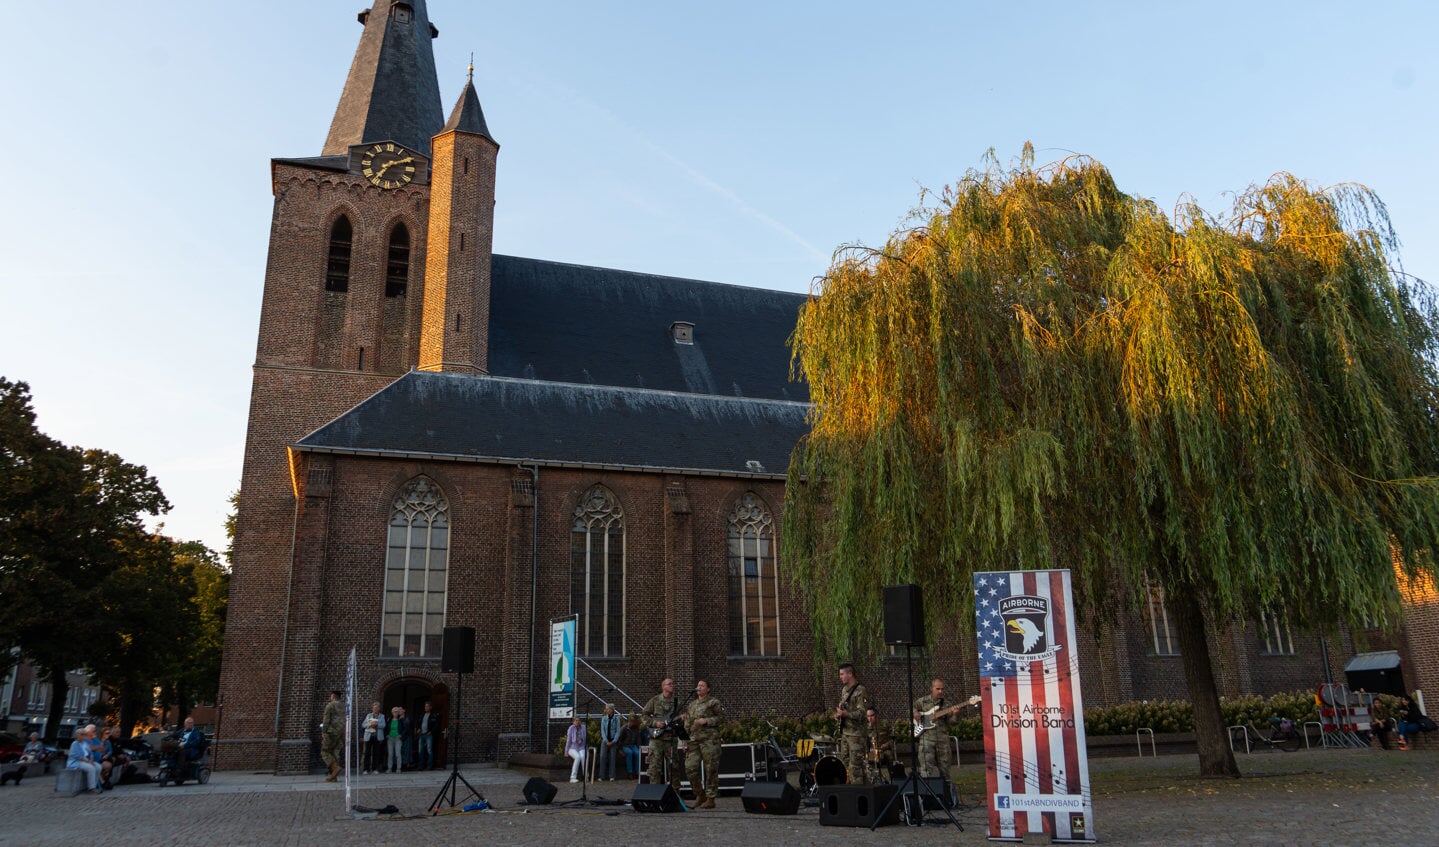 101st Airborne Division Rock Band in Schijndel